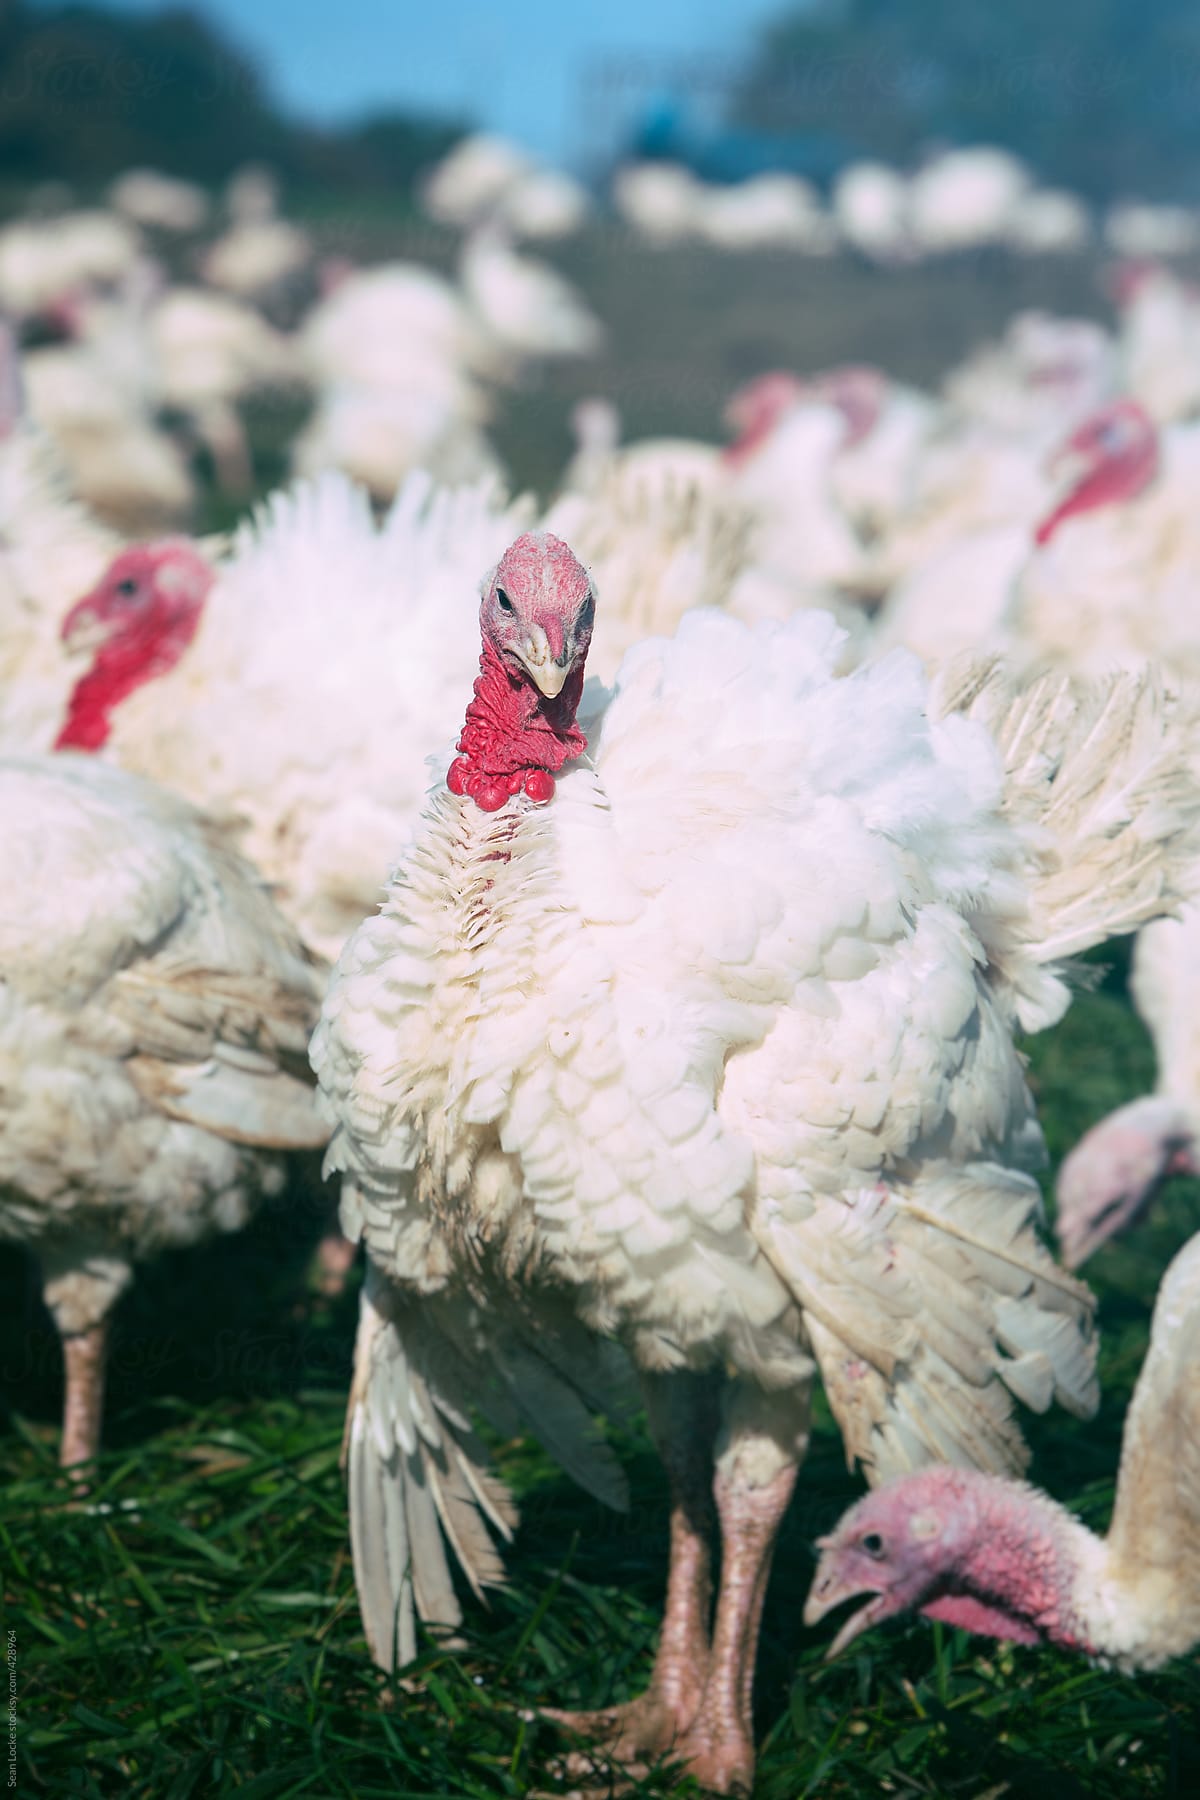 Farm: Male Turkey Looks Proudly At Camera